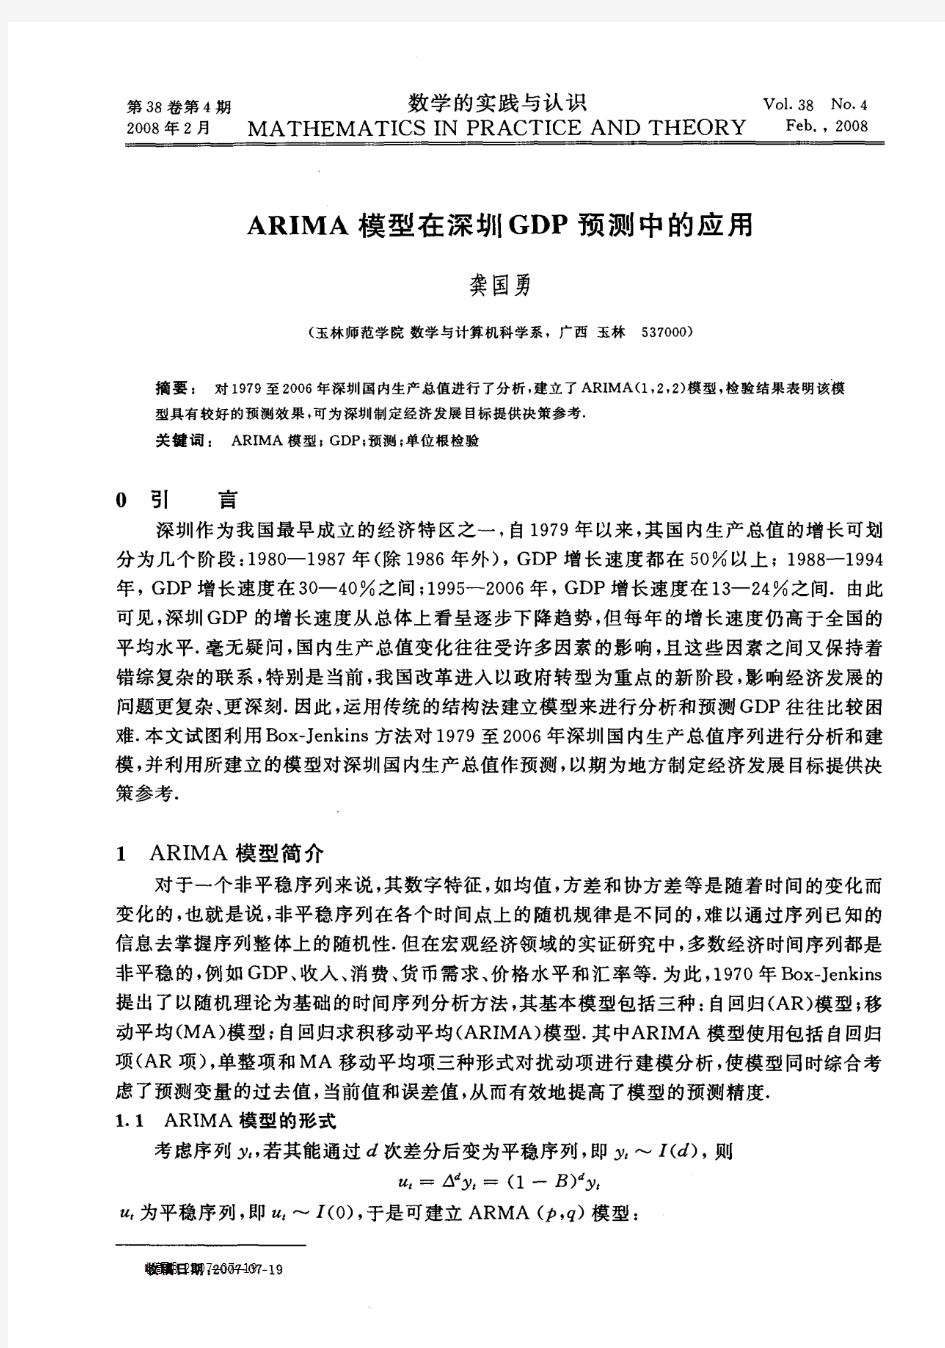 ARIMA模型在深圳GDP预测中的应用